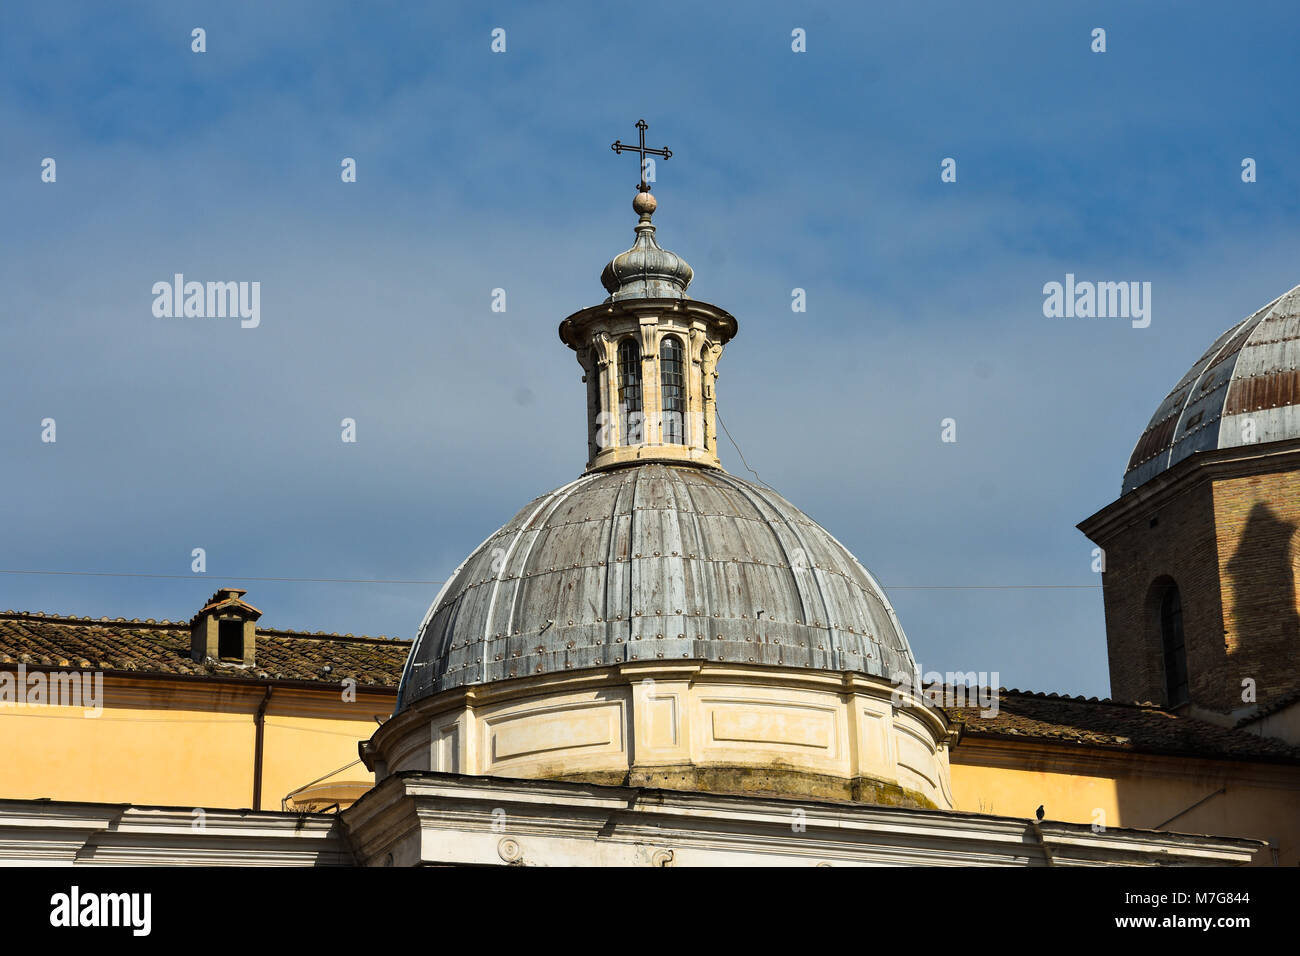 Dome at the Piazza del Popolo (People's Square). Rome, Italy Stock Photo